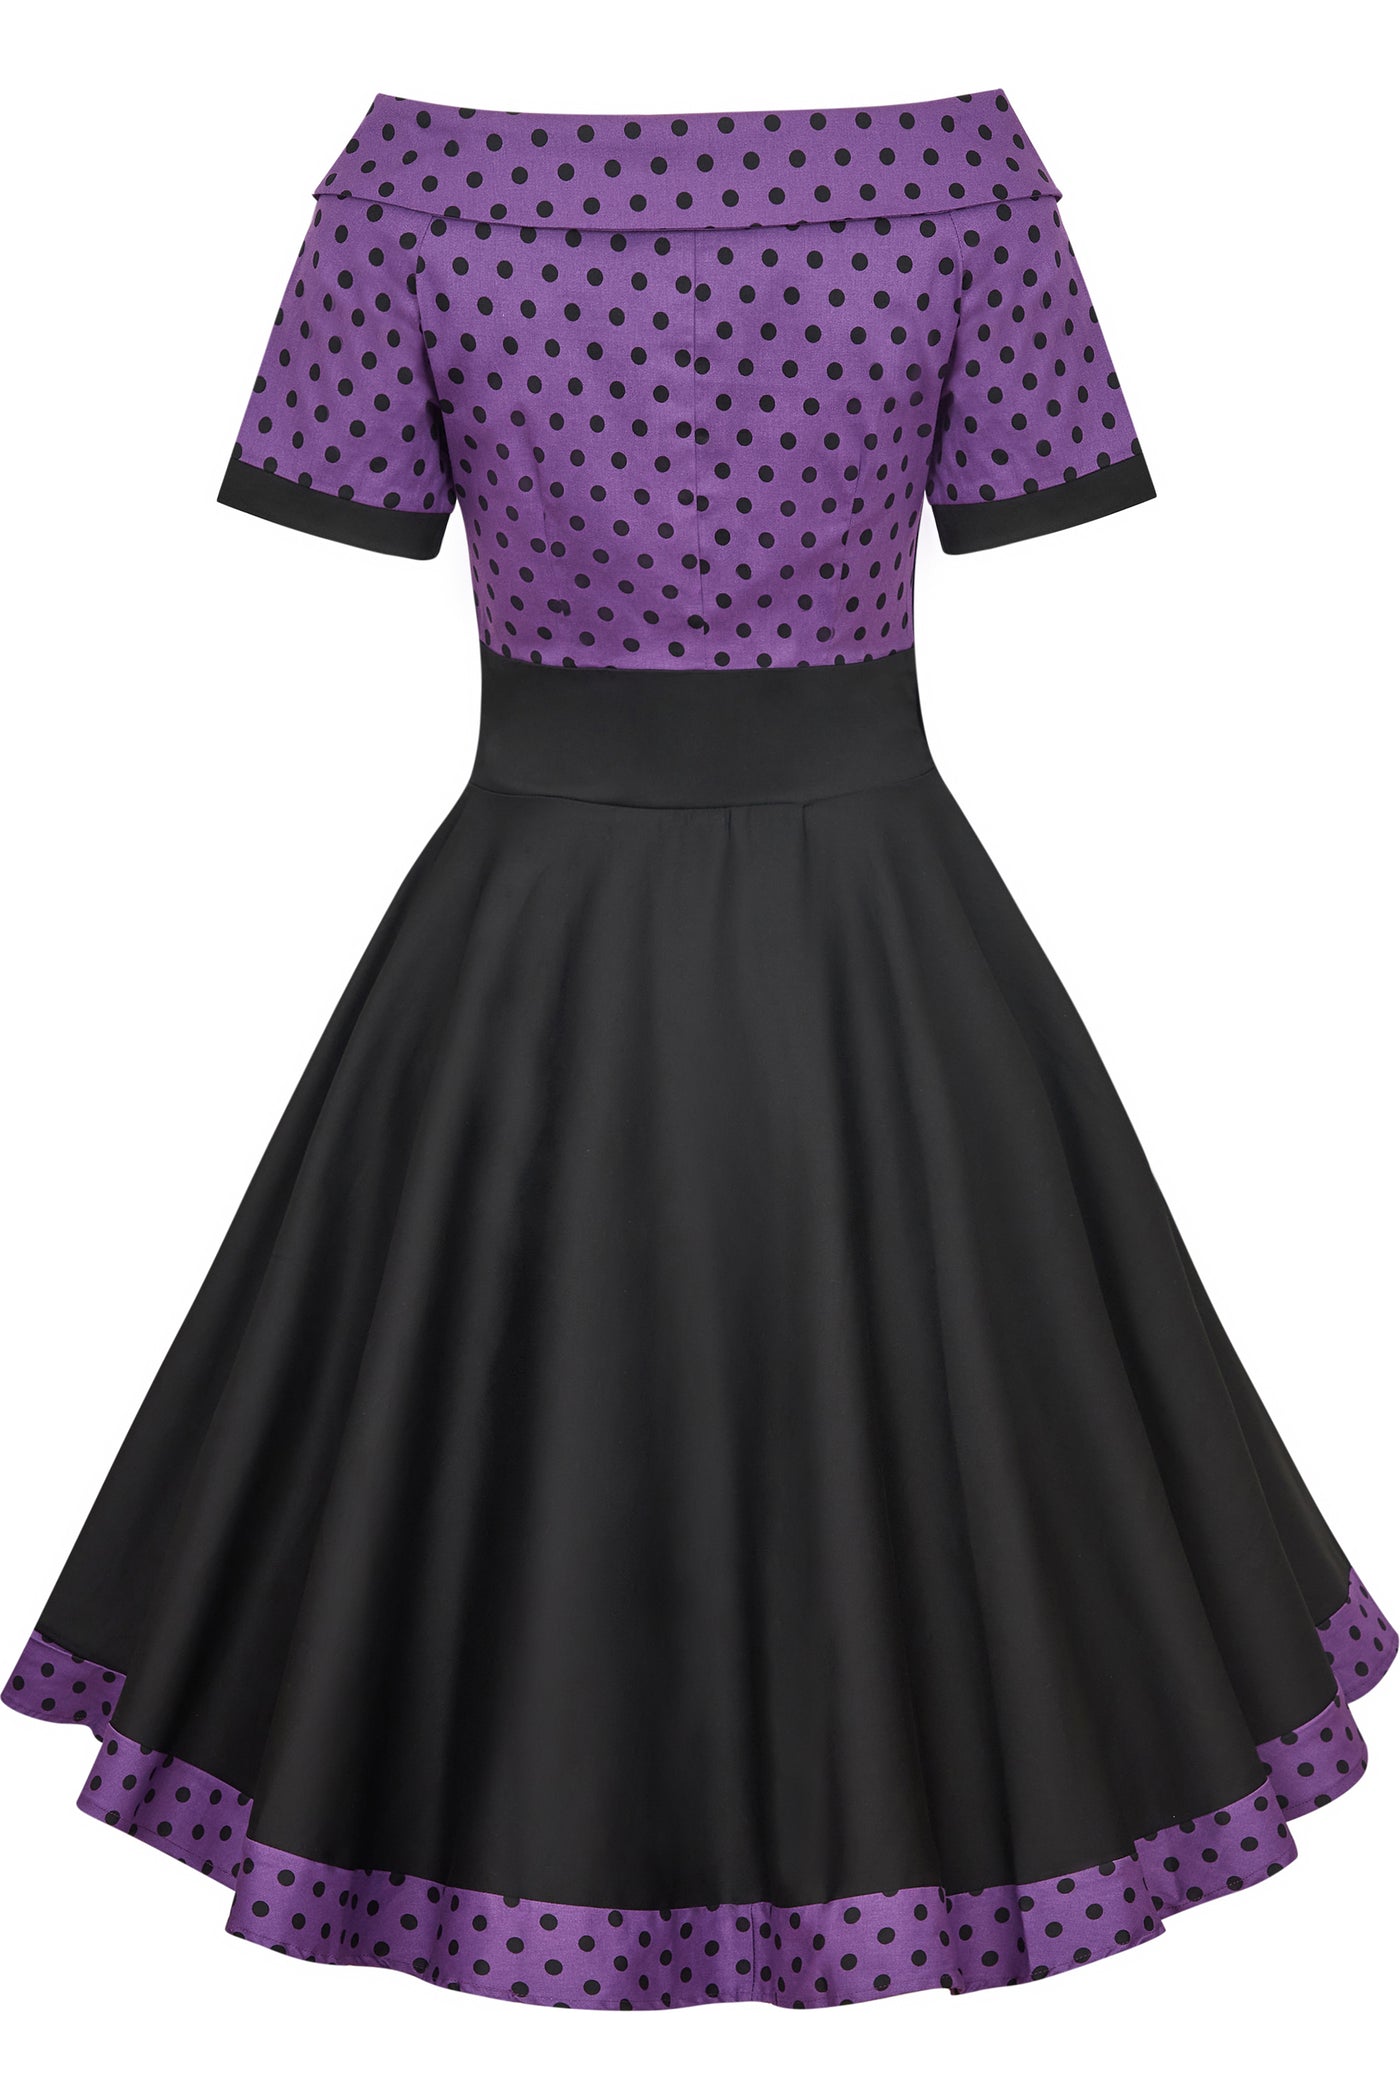 Plus Size Retro Purple and Black Polka Dot Circle Dress back view